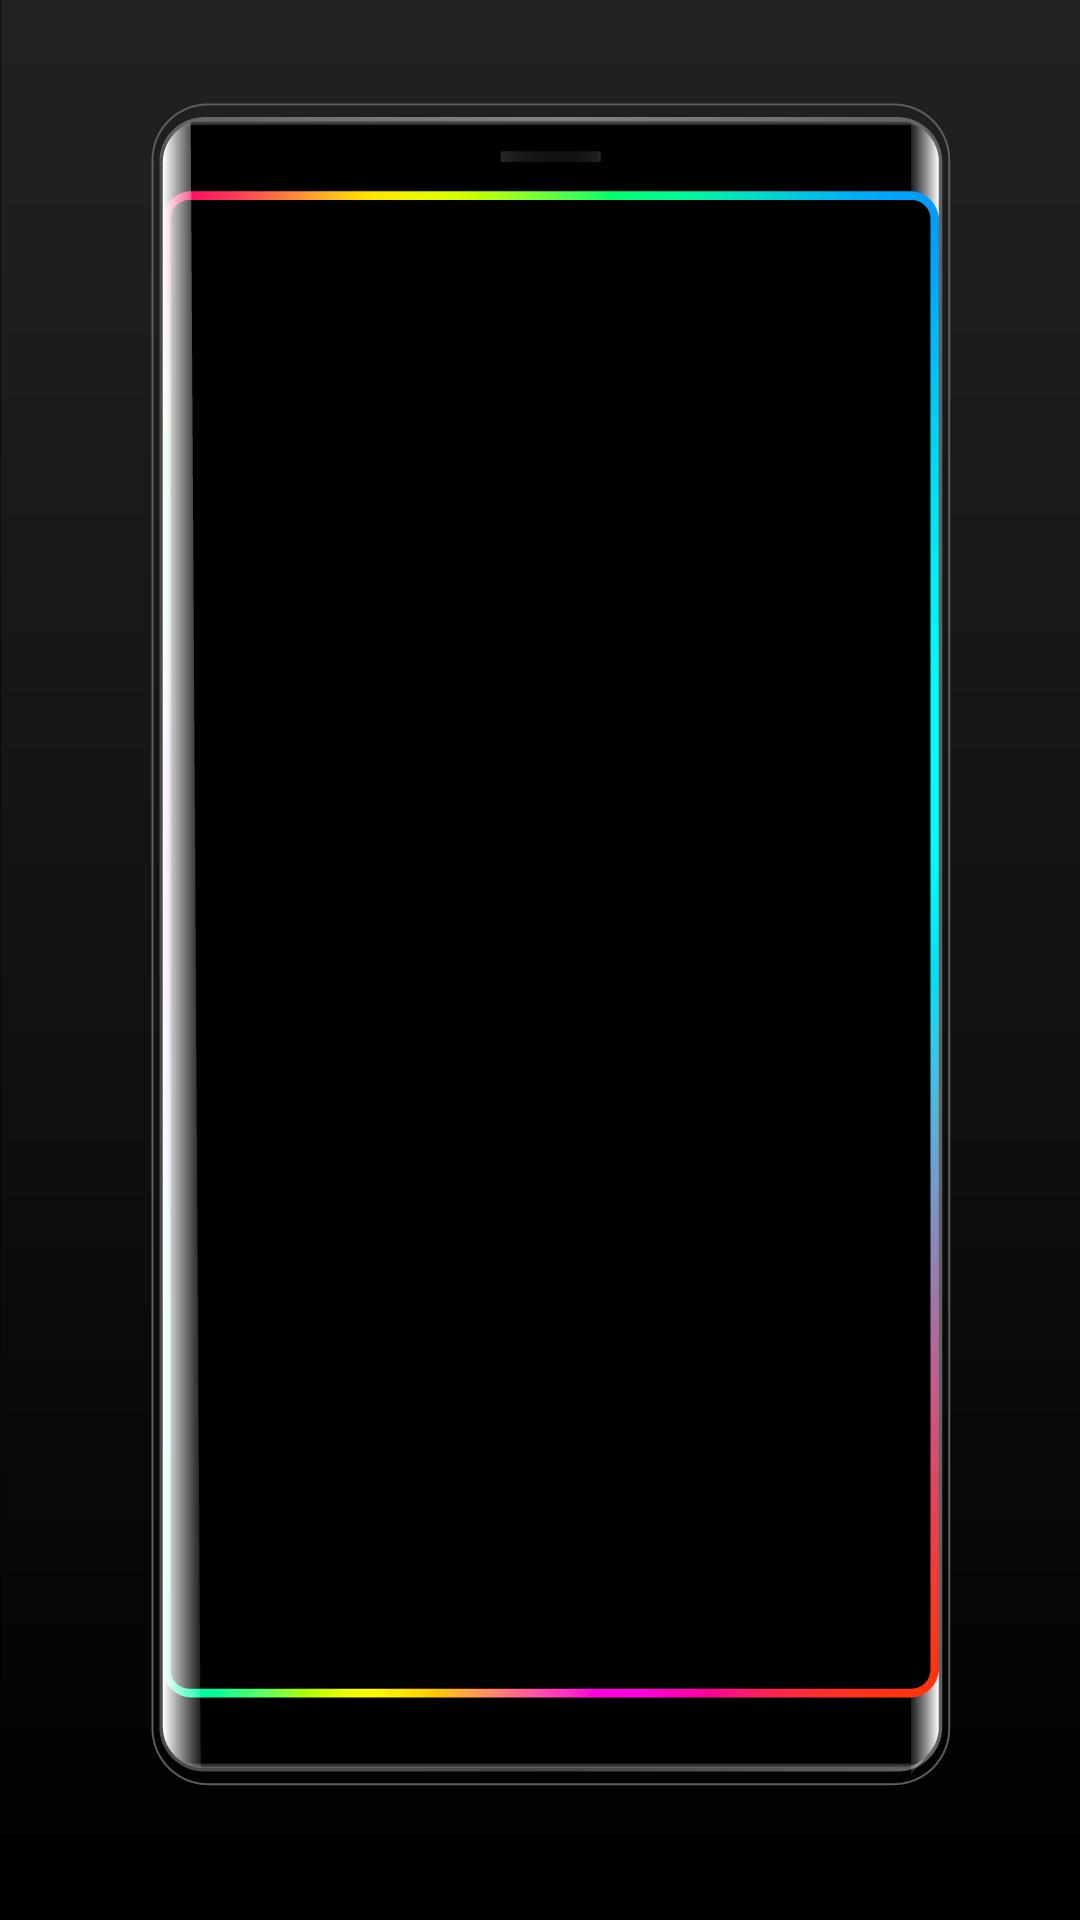 Edge Lighting Colors - Round Colors Galaxy 9.0 Screenshot 3